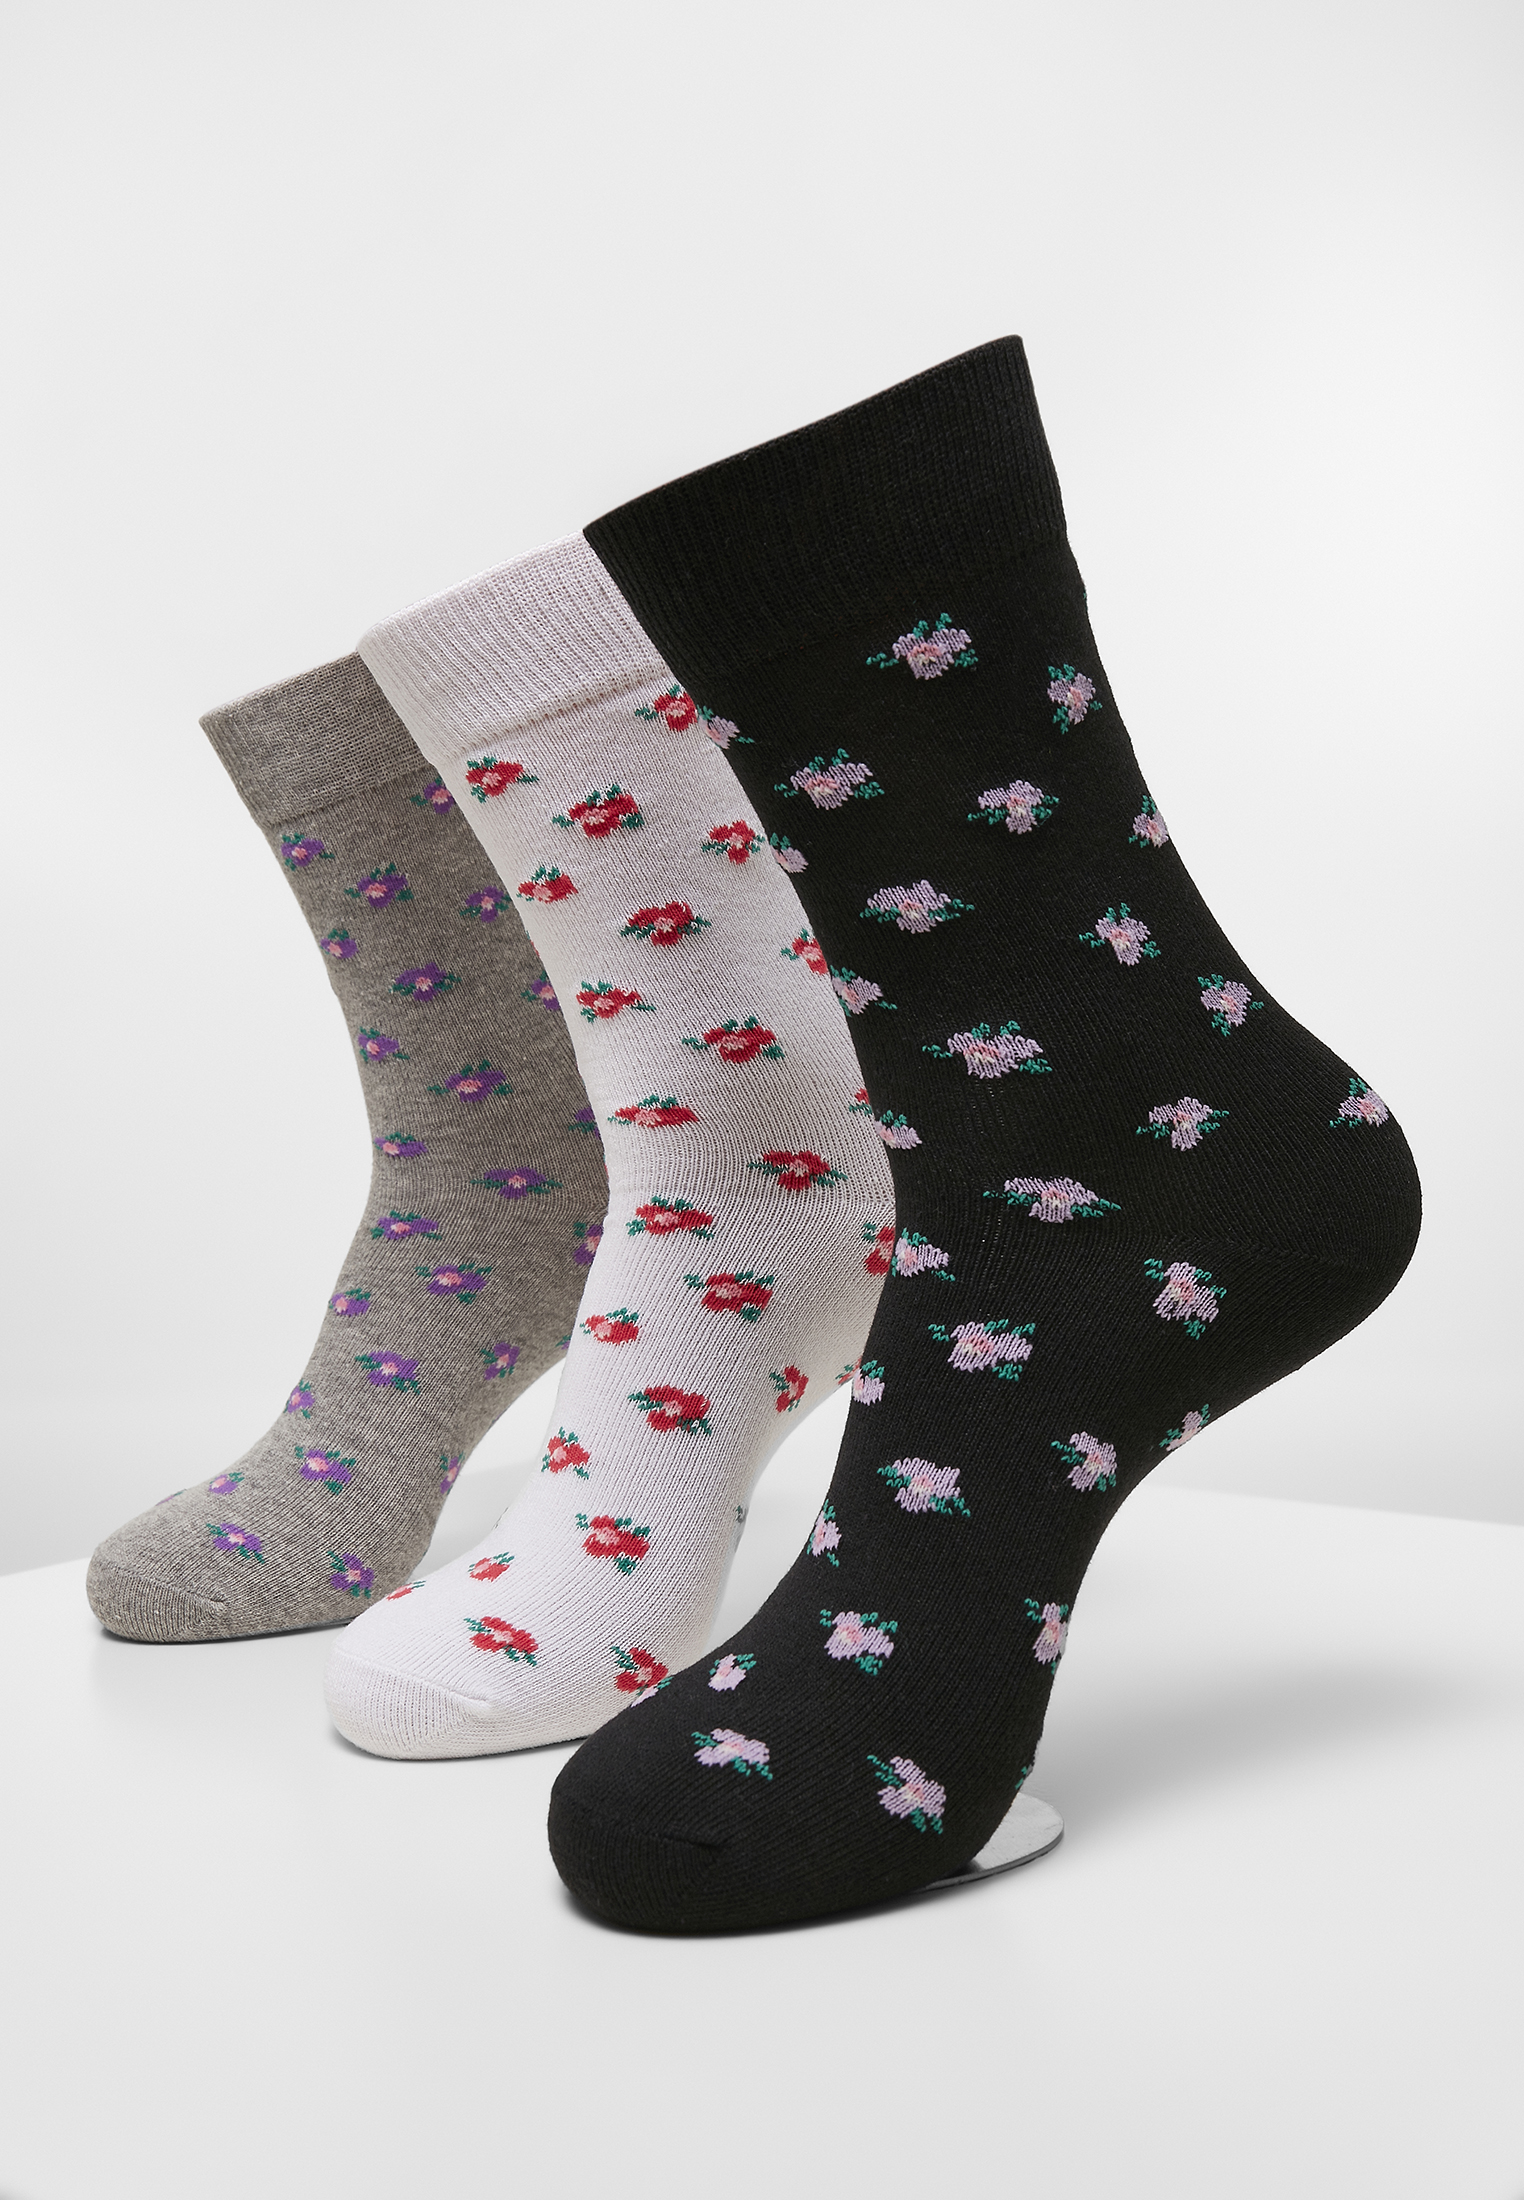 Socken Recycled Yarn Flower Socks 3-Pack in Farbe grey+black+white